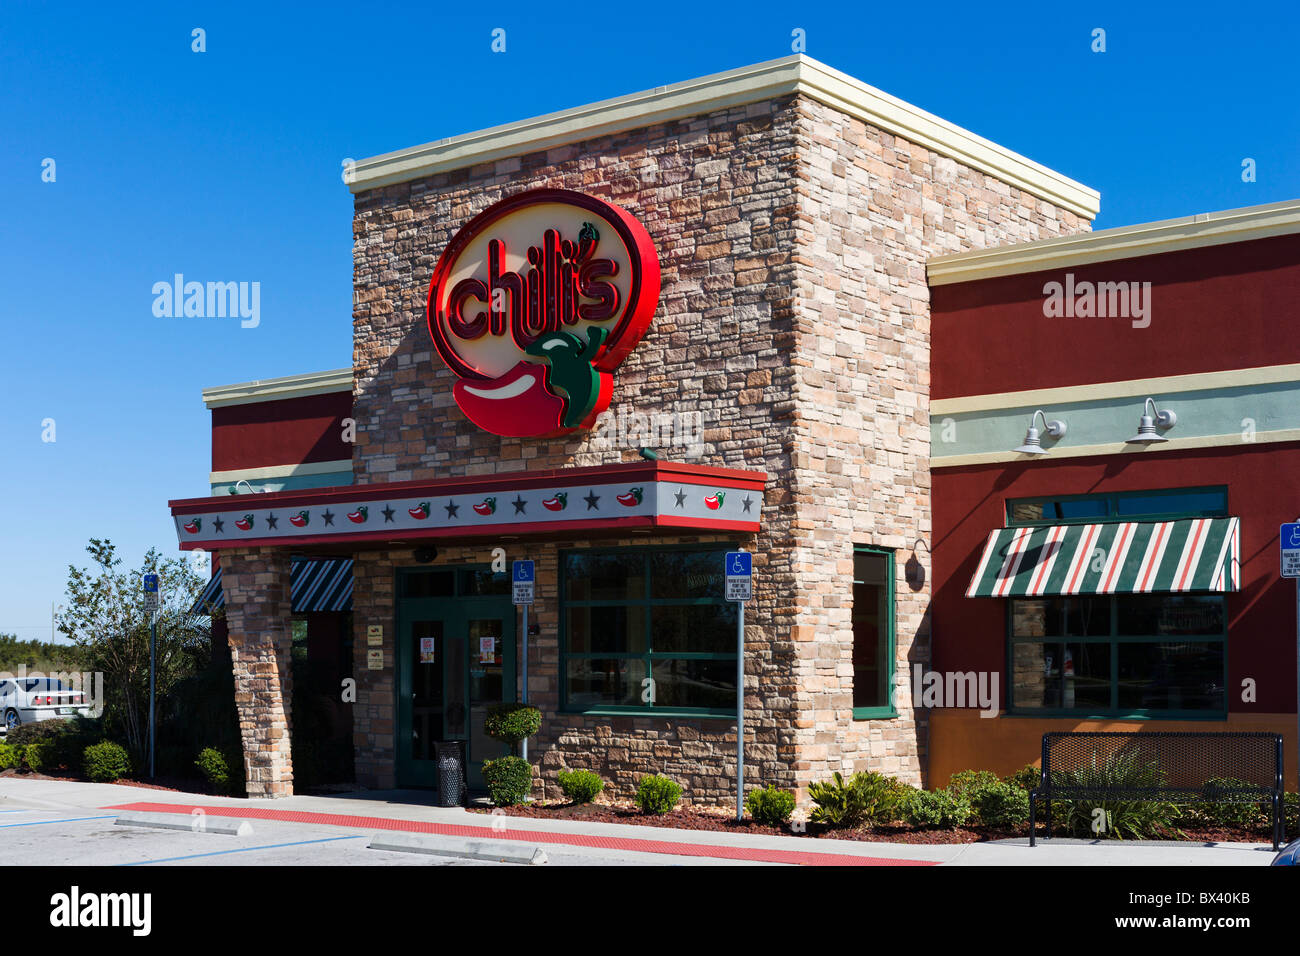 Chili's Restaurant, Eagle Ridge Mall, Lake Wales, Central Florida, USA Banque D'Images